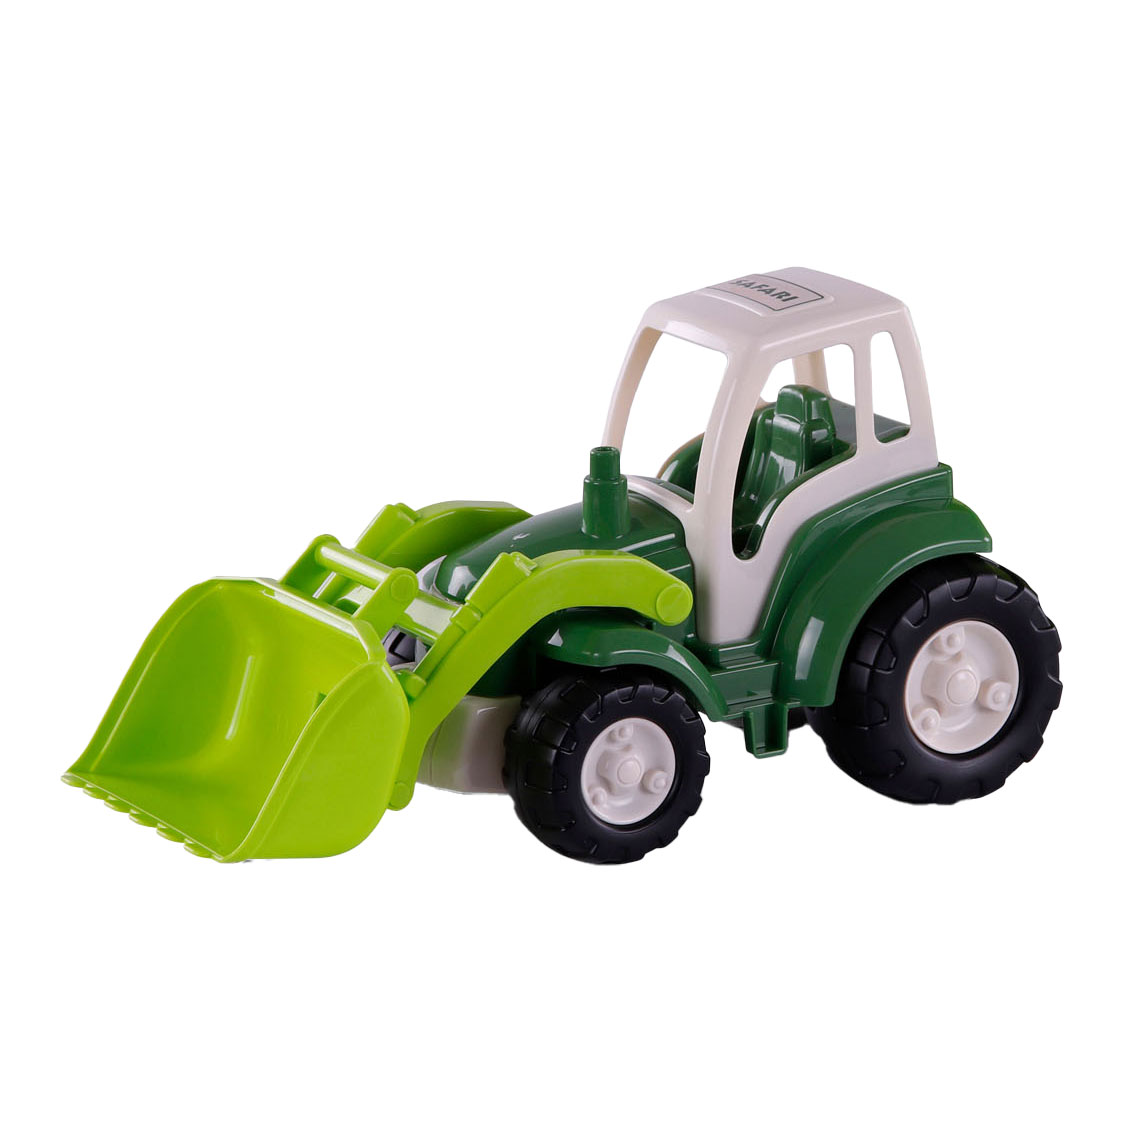 Cavallino Toys Cavallino XL Tractor Groen, 40cm